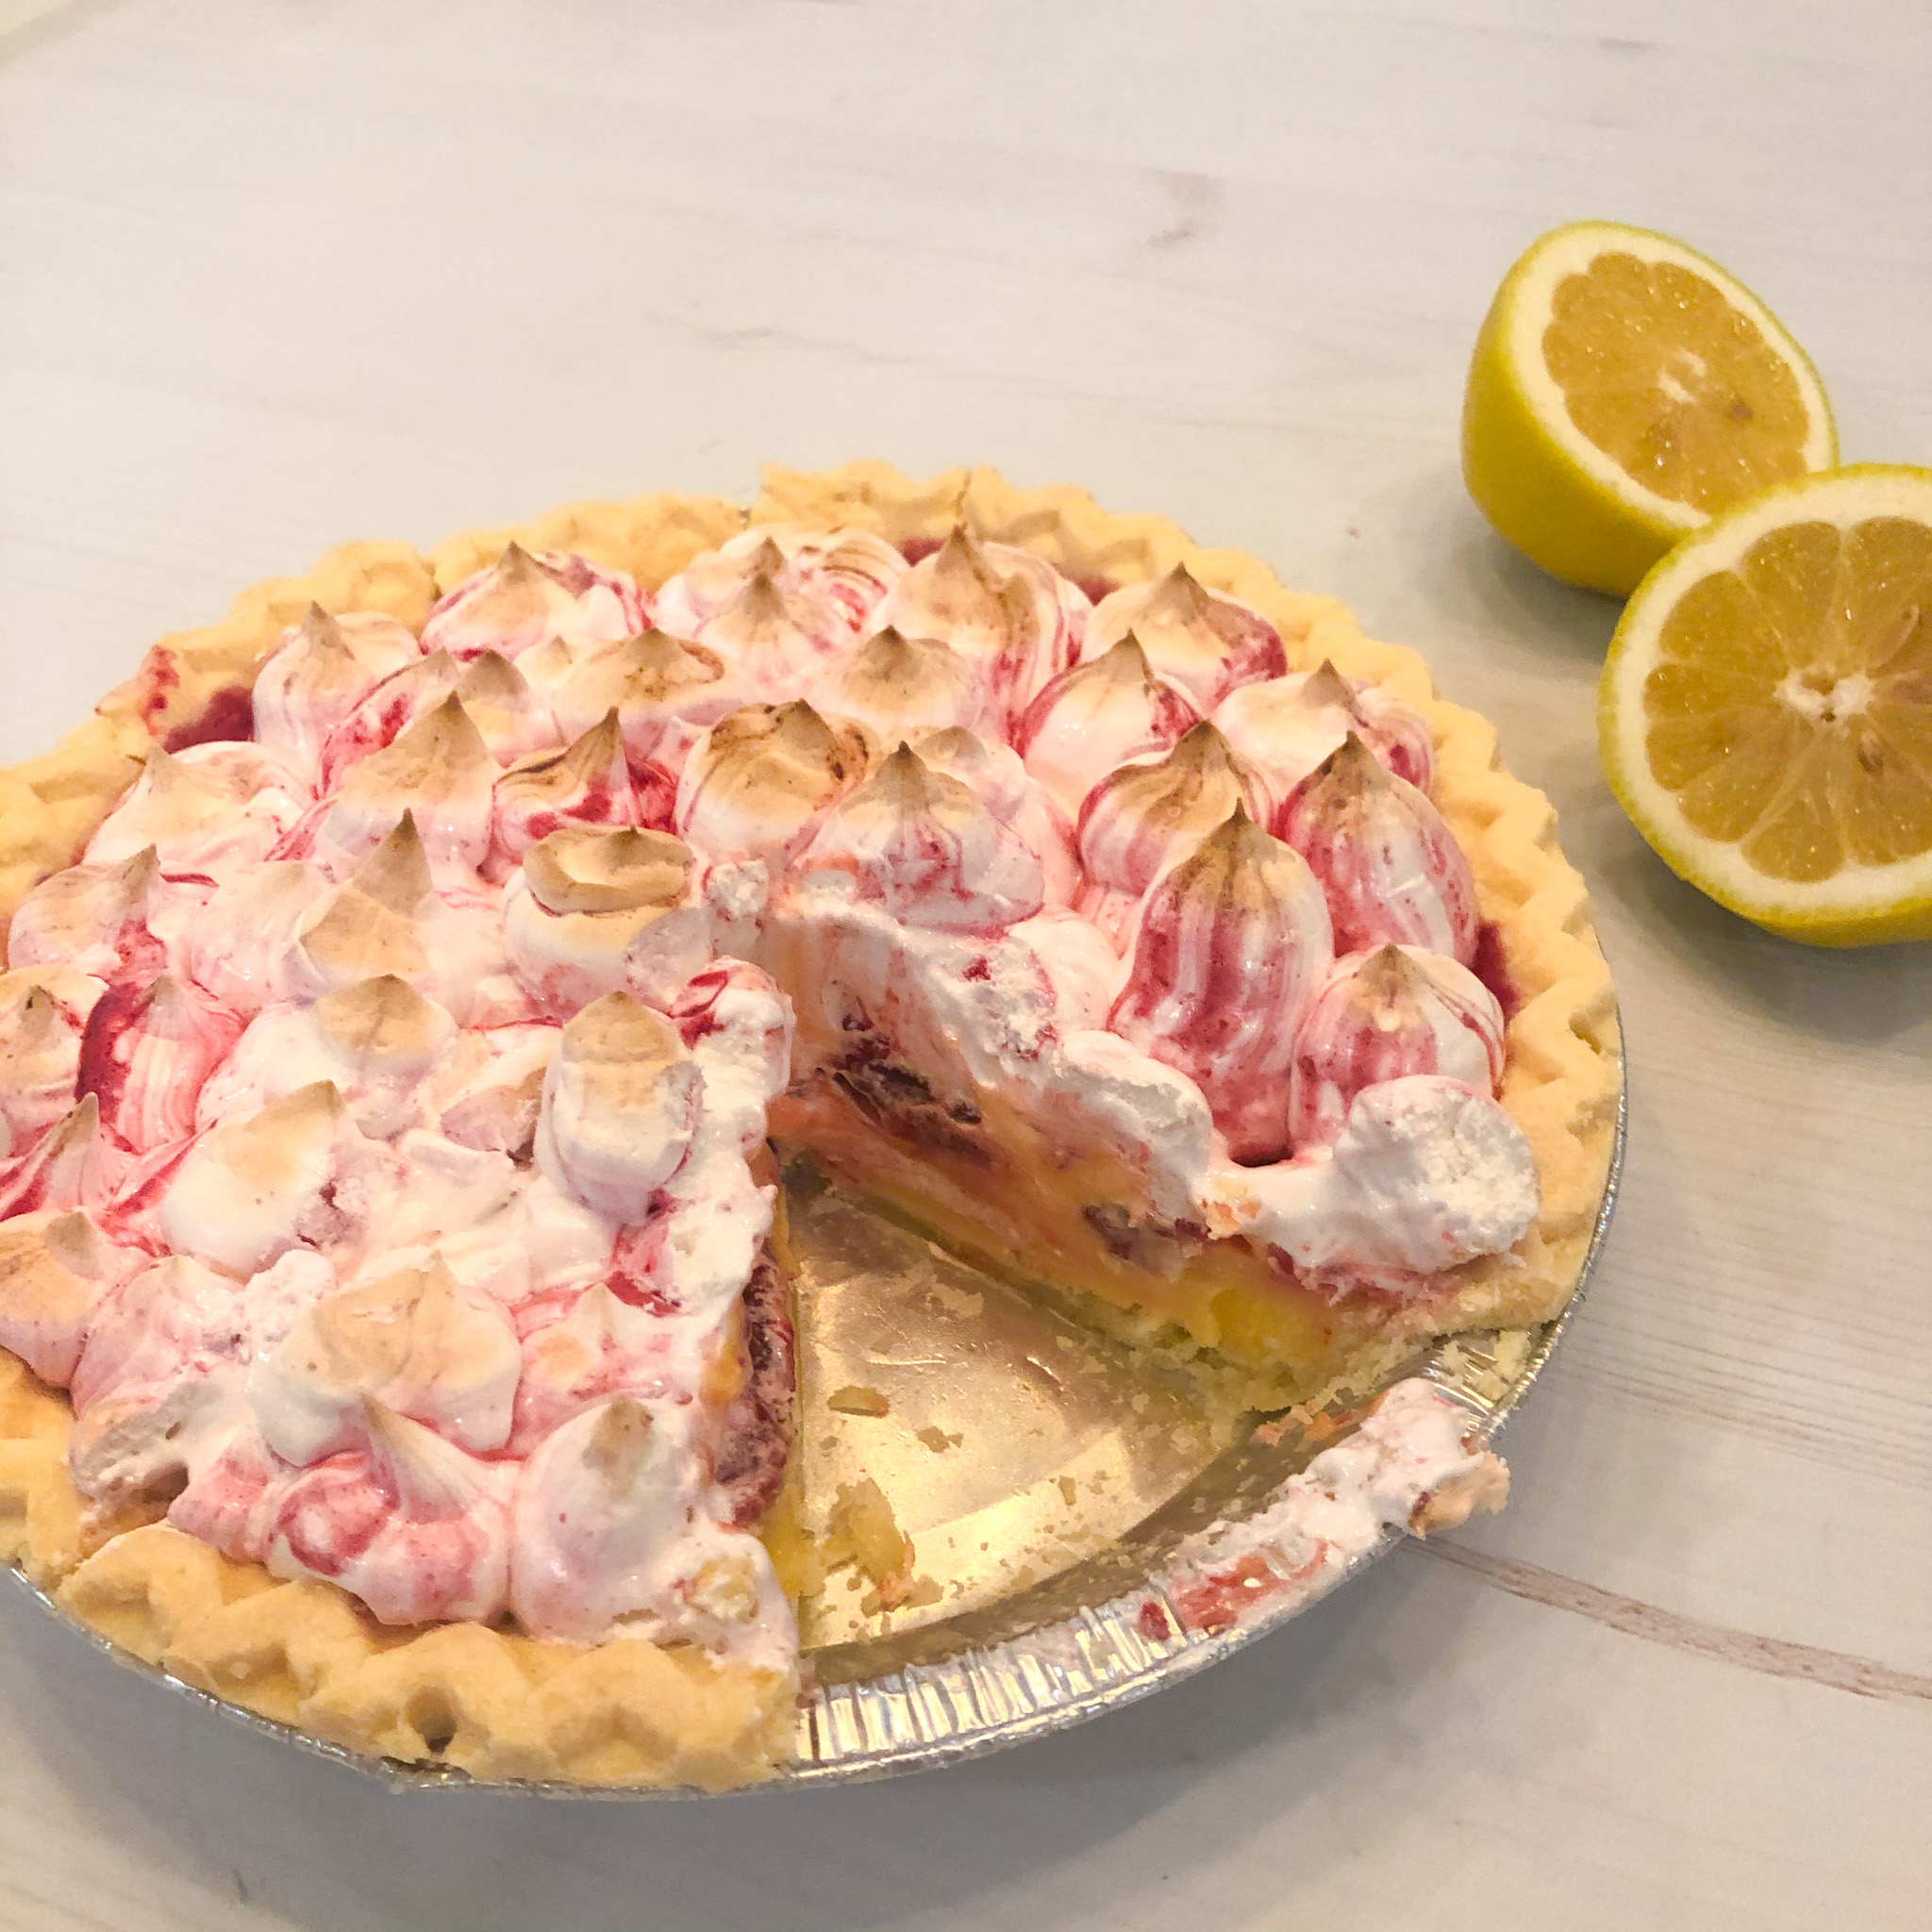 the finished gluten free lemon & raspberry meringue pie